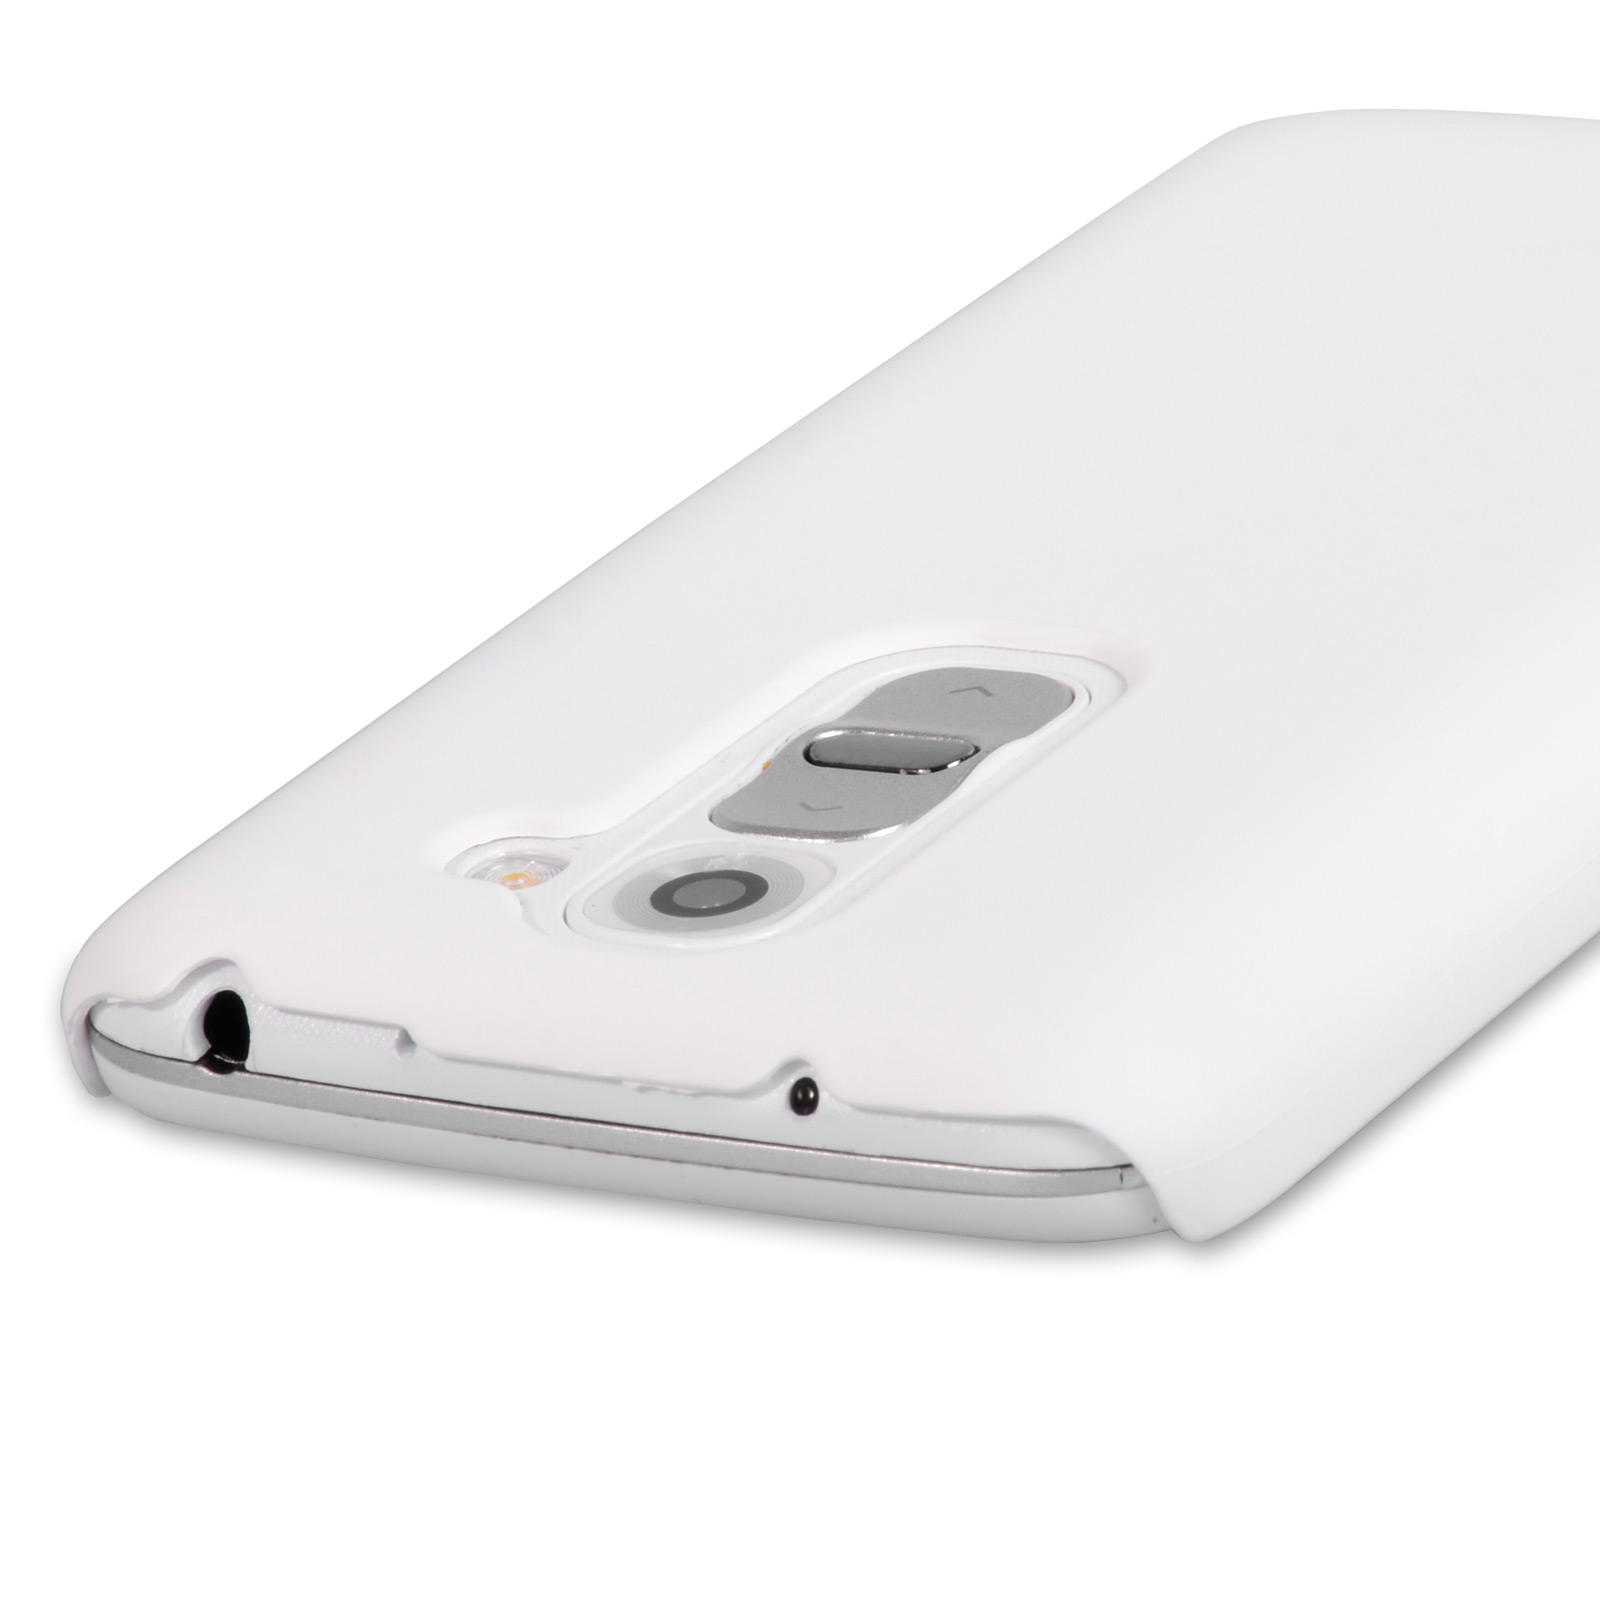 YouSave Accessories LG G2 Mini Hard Hybrid Case - White